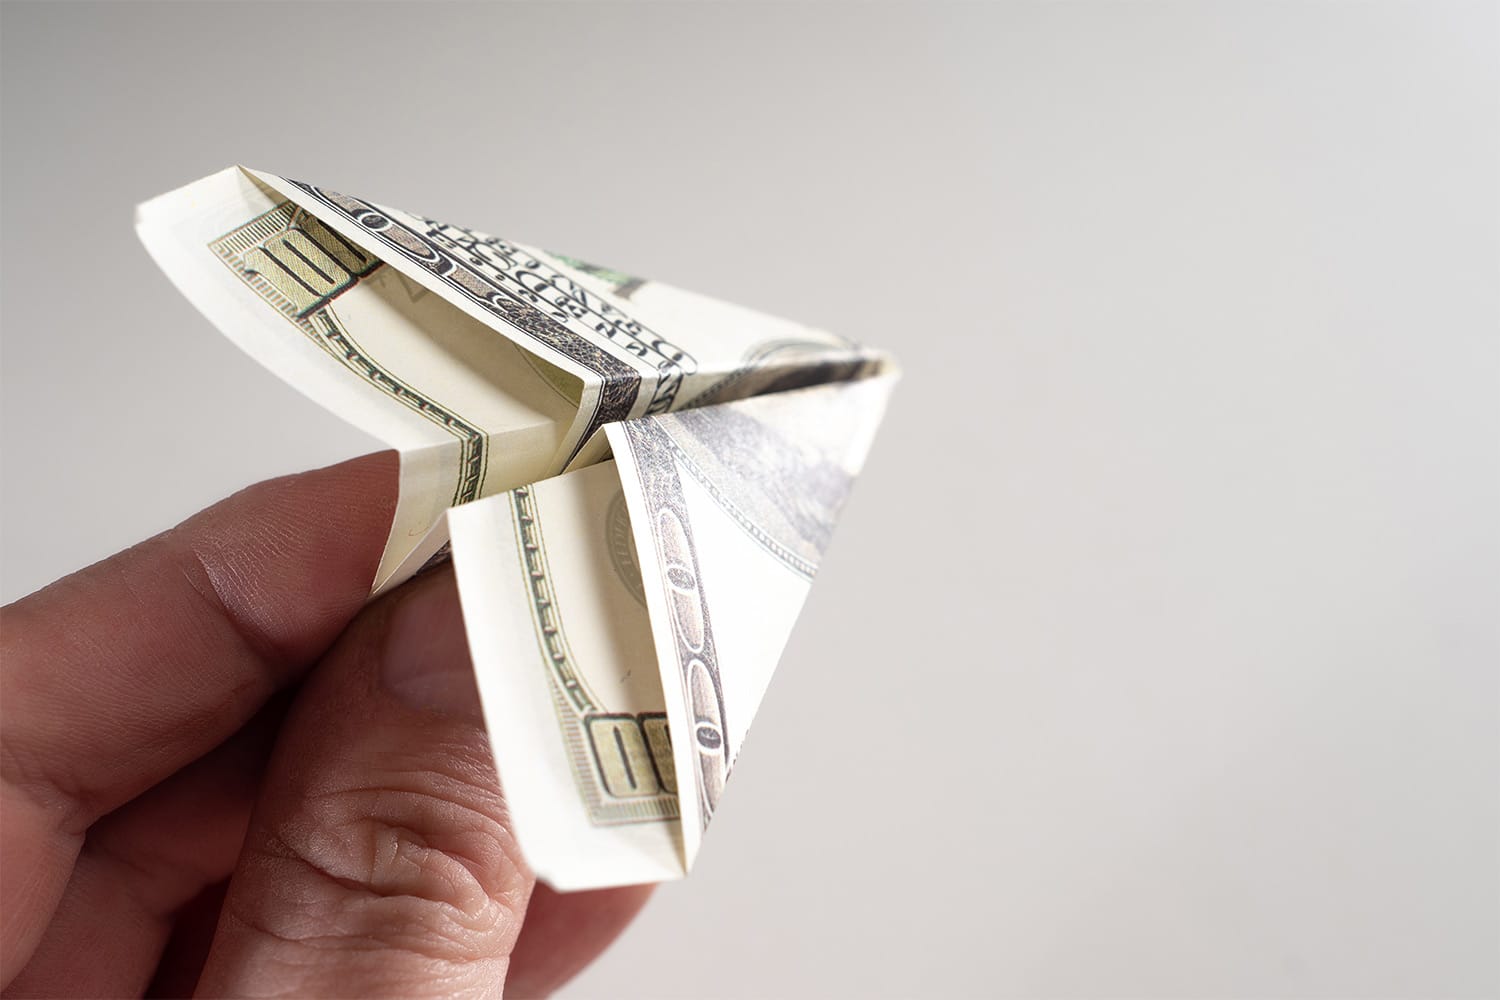 A 10 dollar bill folded into a paper plane.